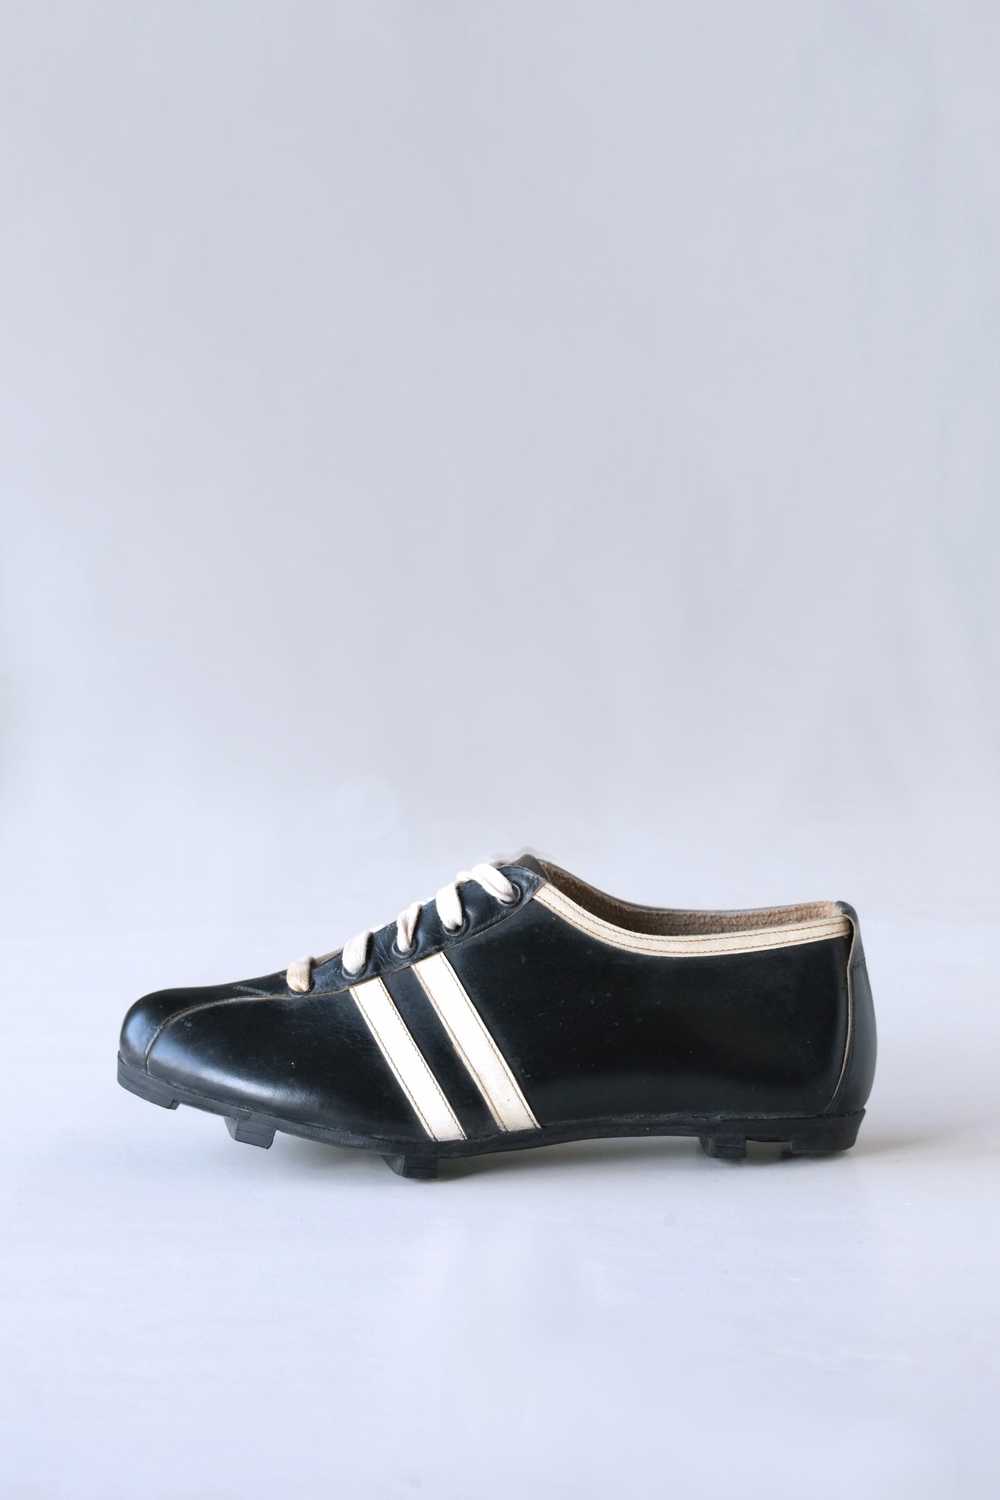 RARE 1960's Football Boots - image 2